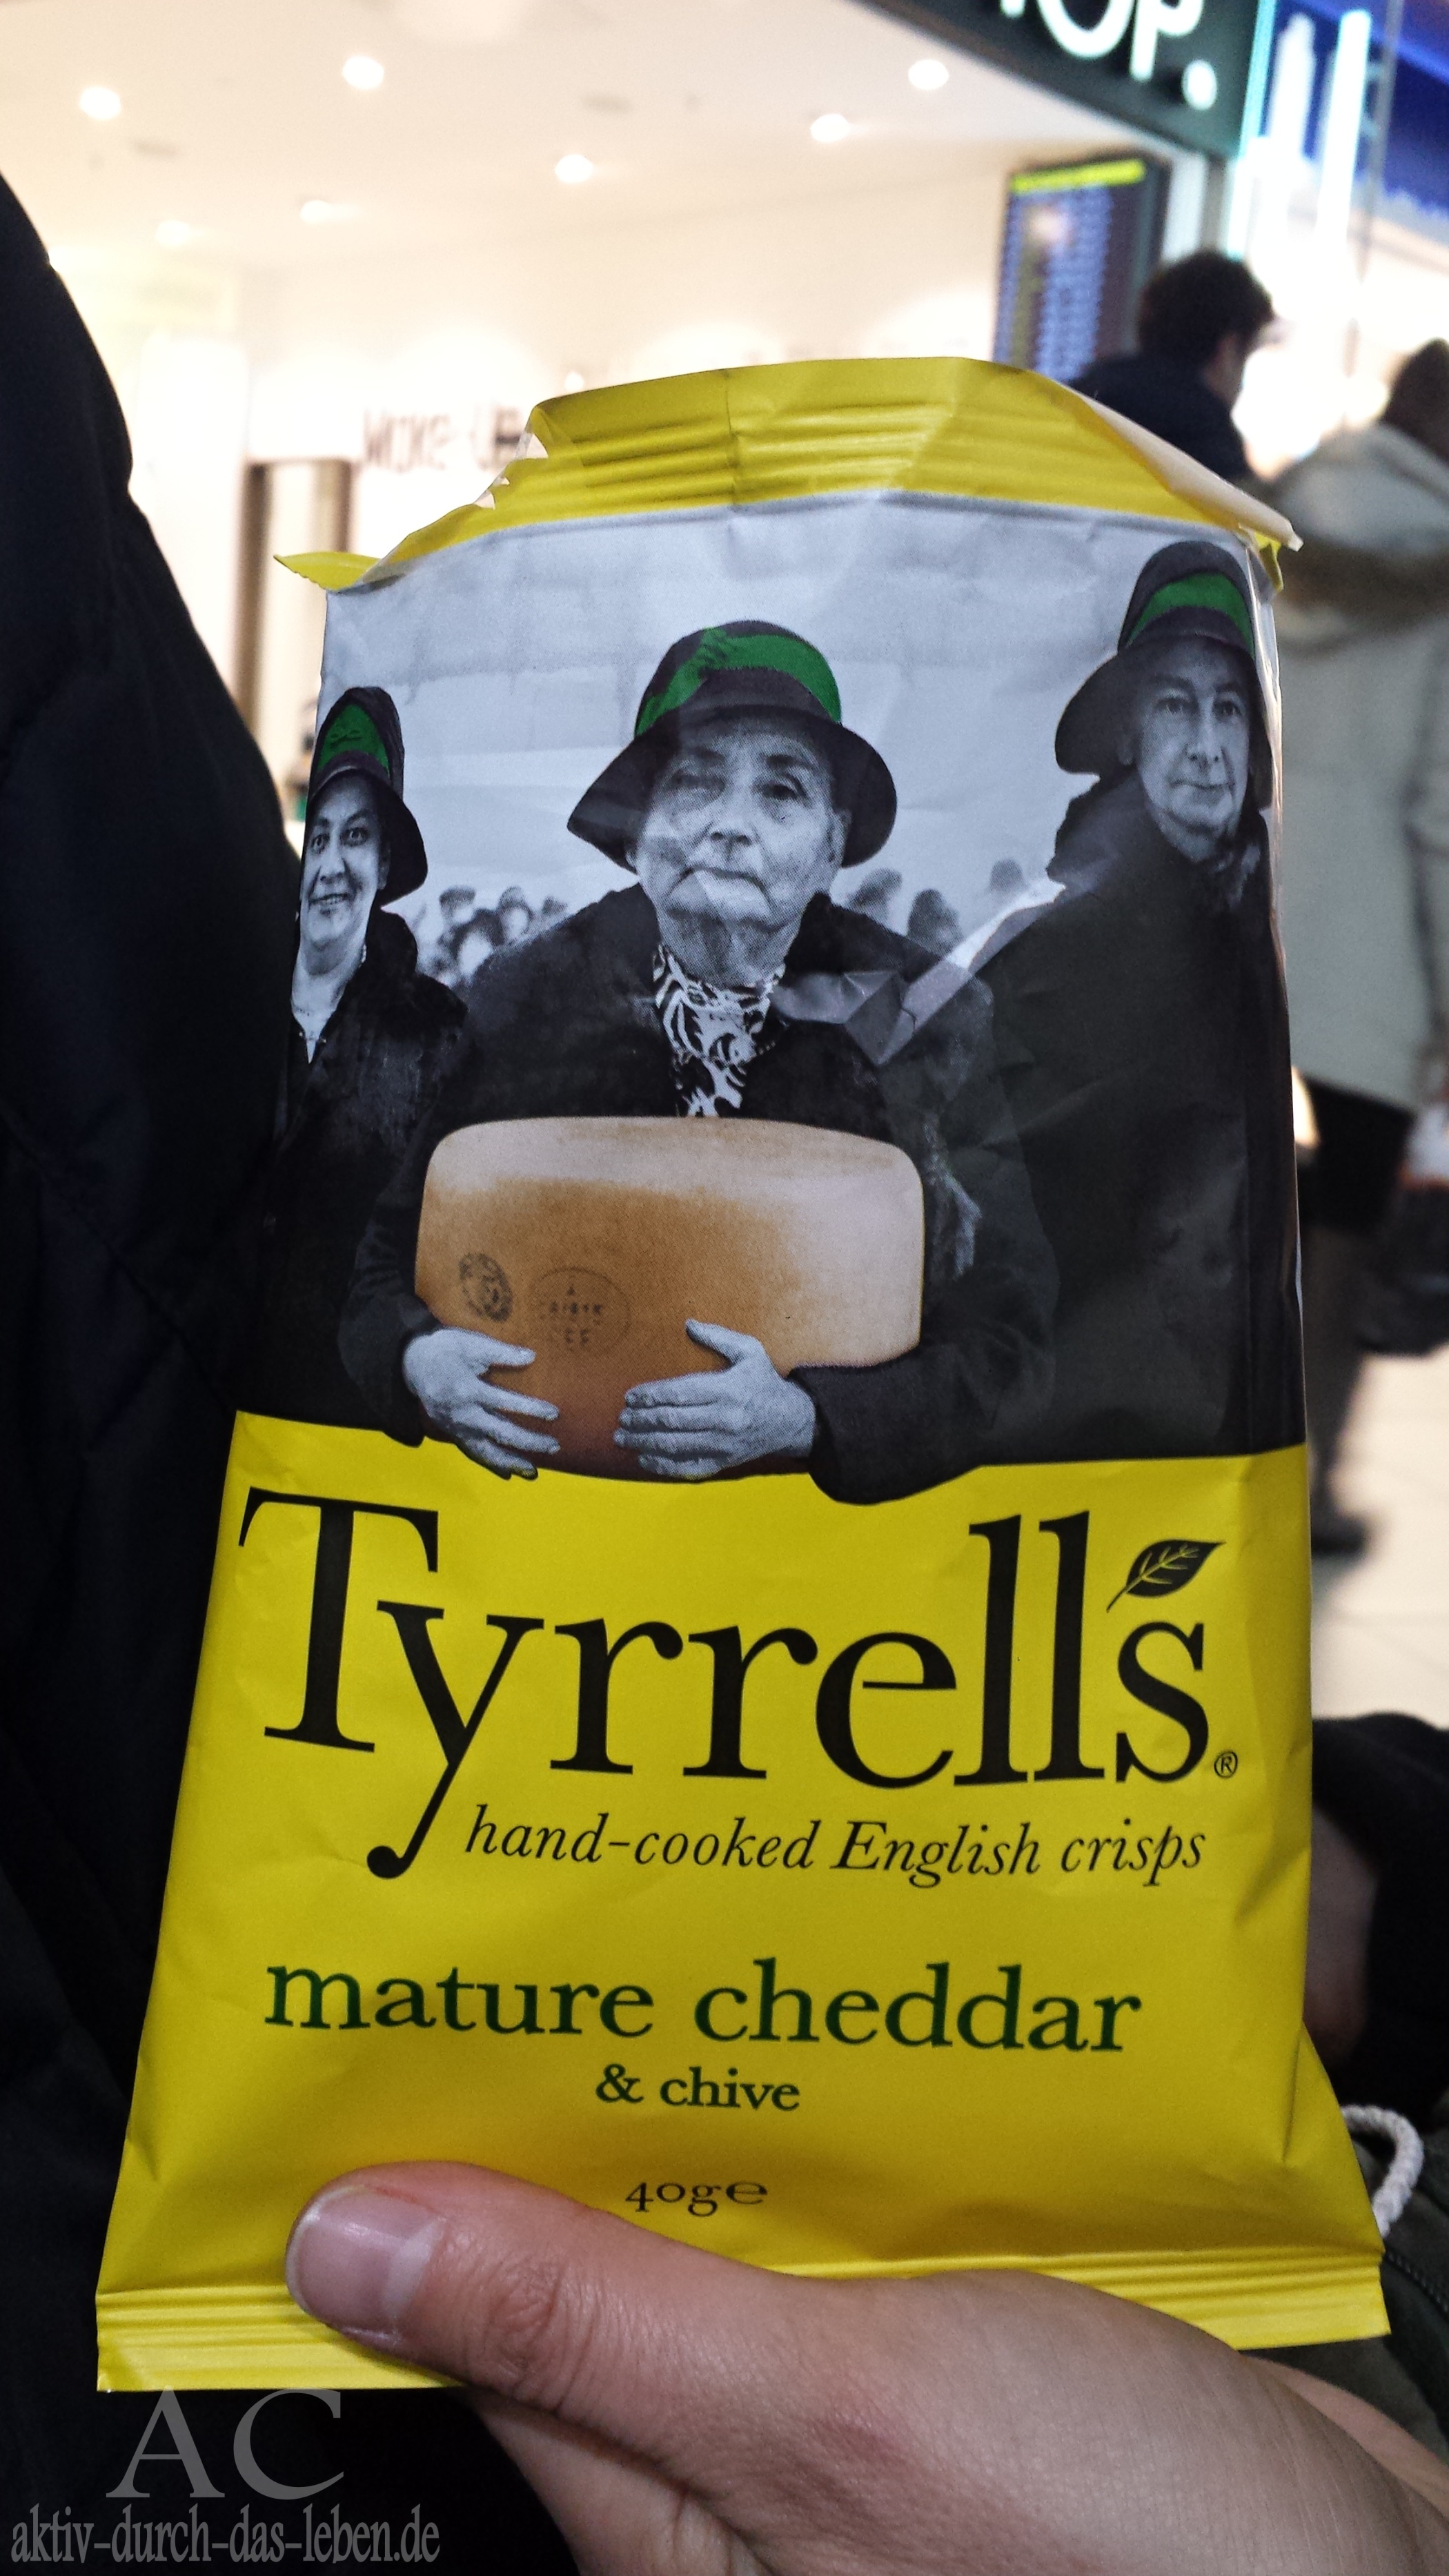 Tyrrell's English Srisps